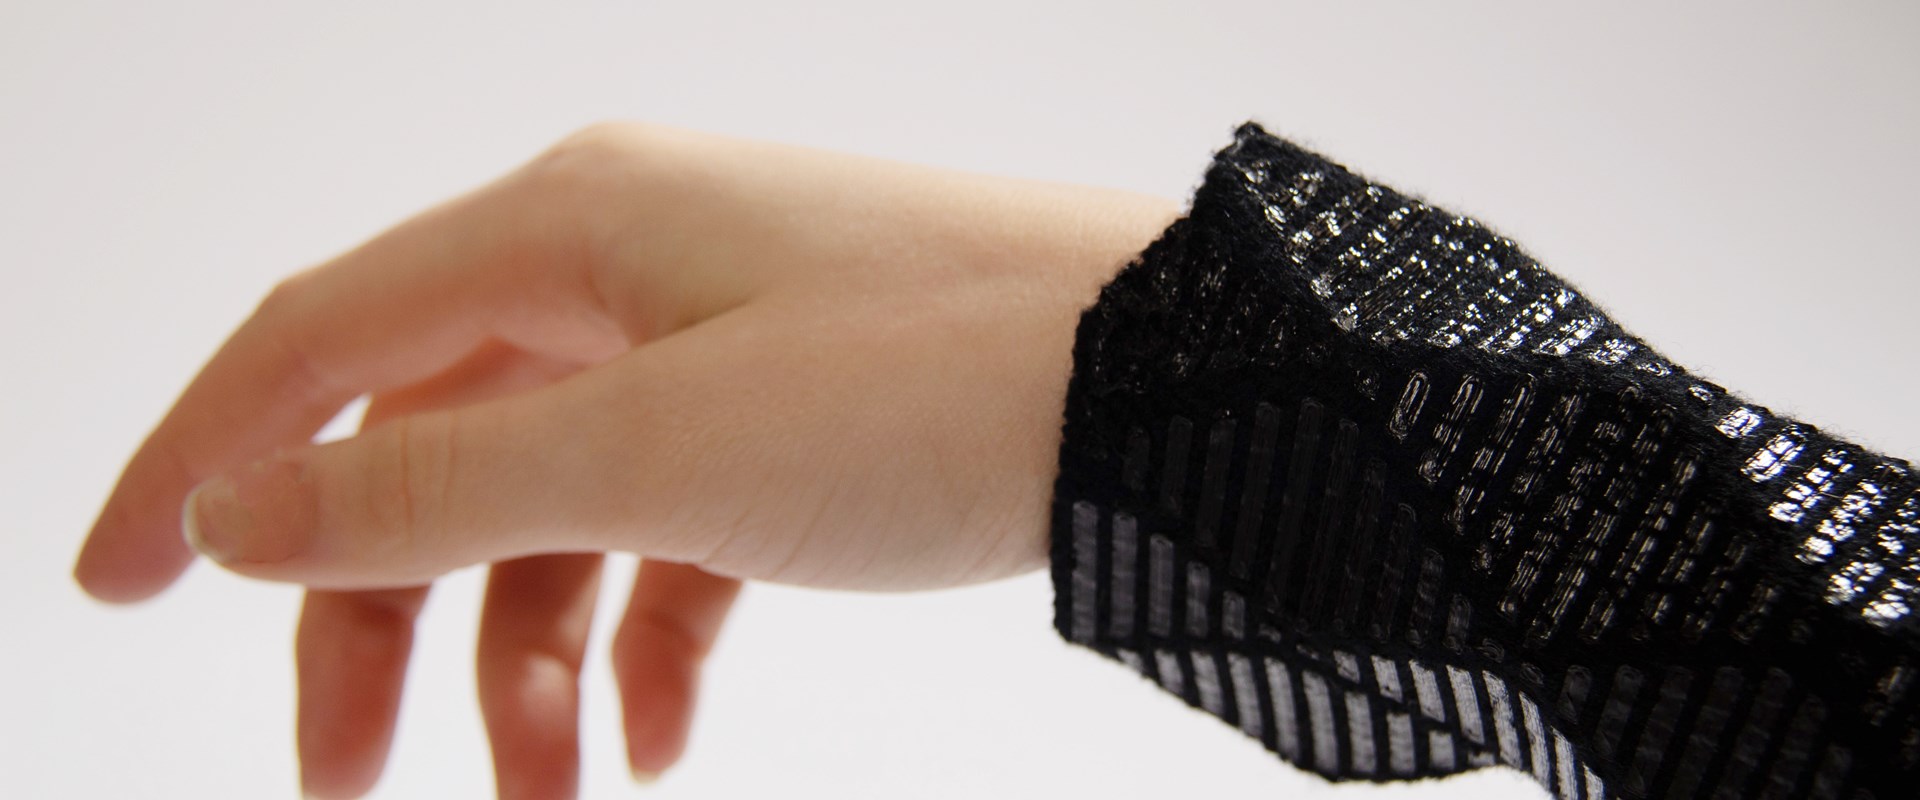 Black textile piece for the wrist.